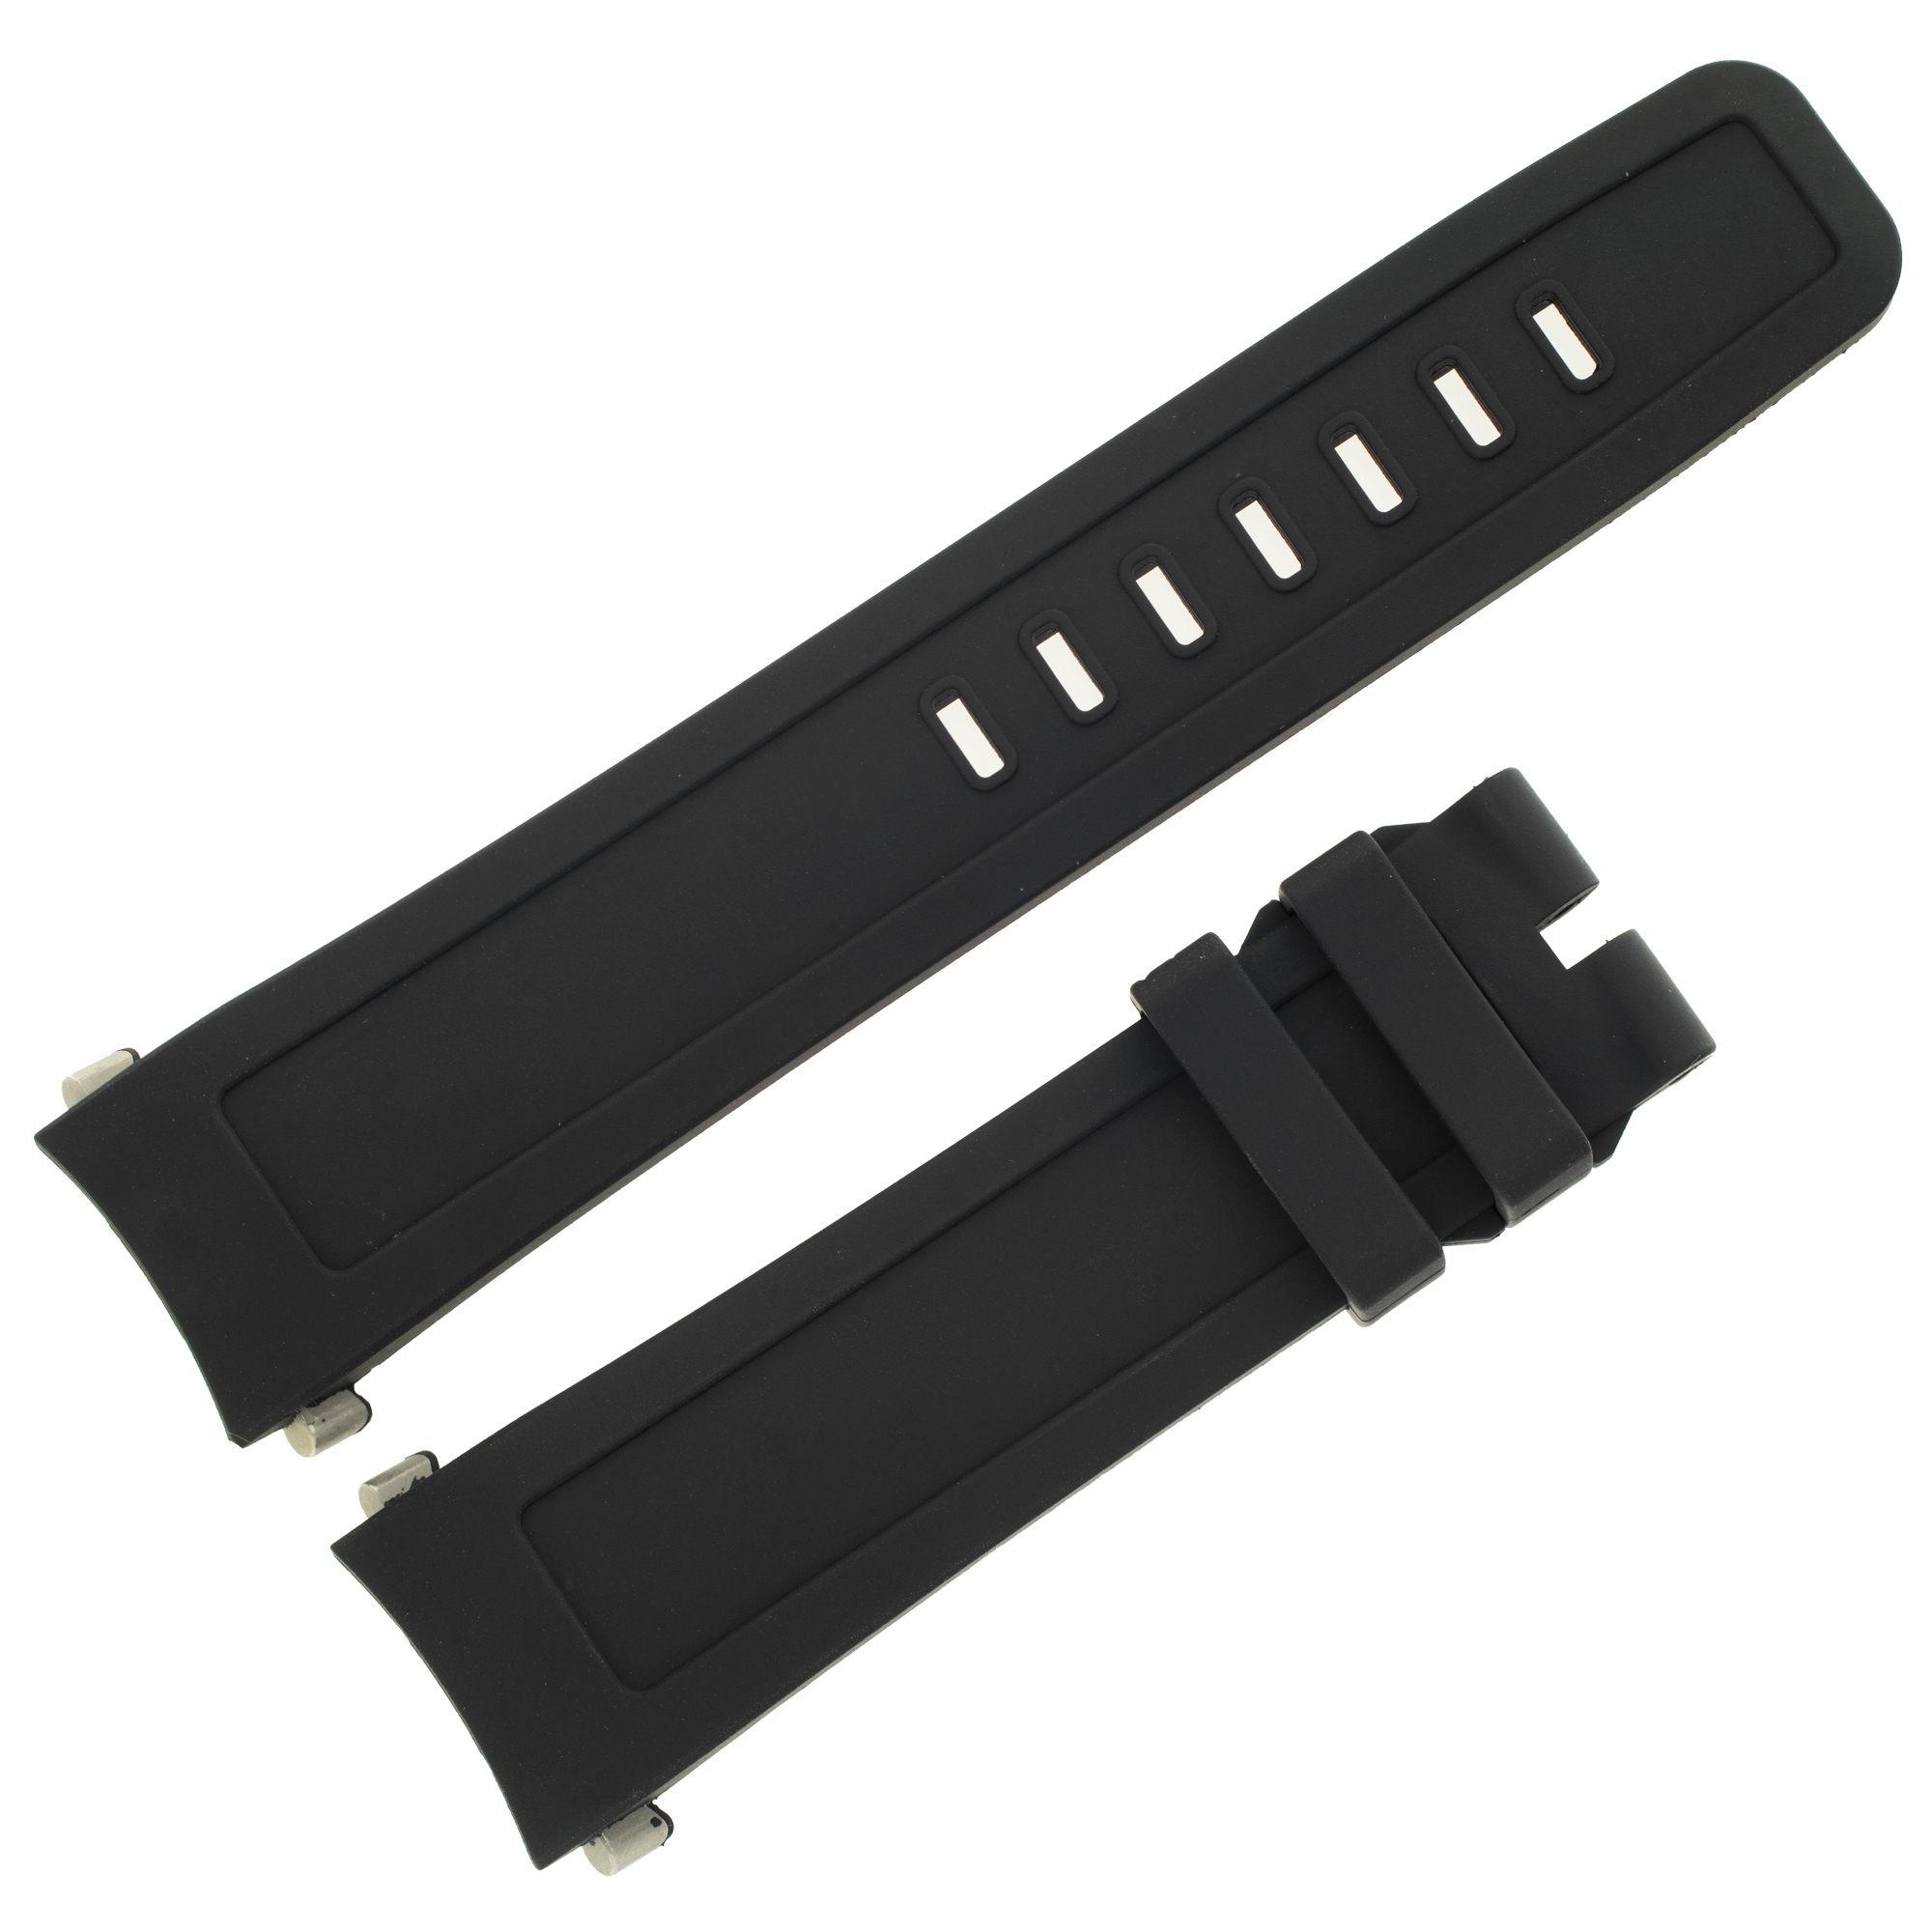 IWC Aquatimer black rubber strap (20mmx18mm)